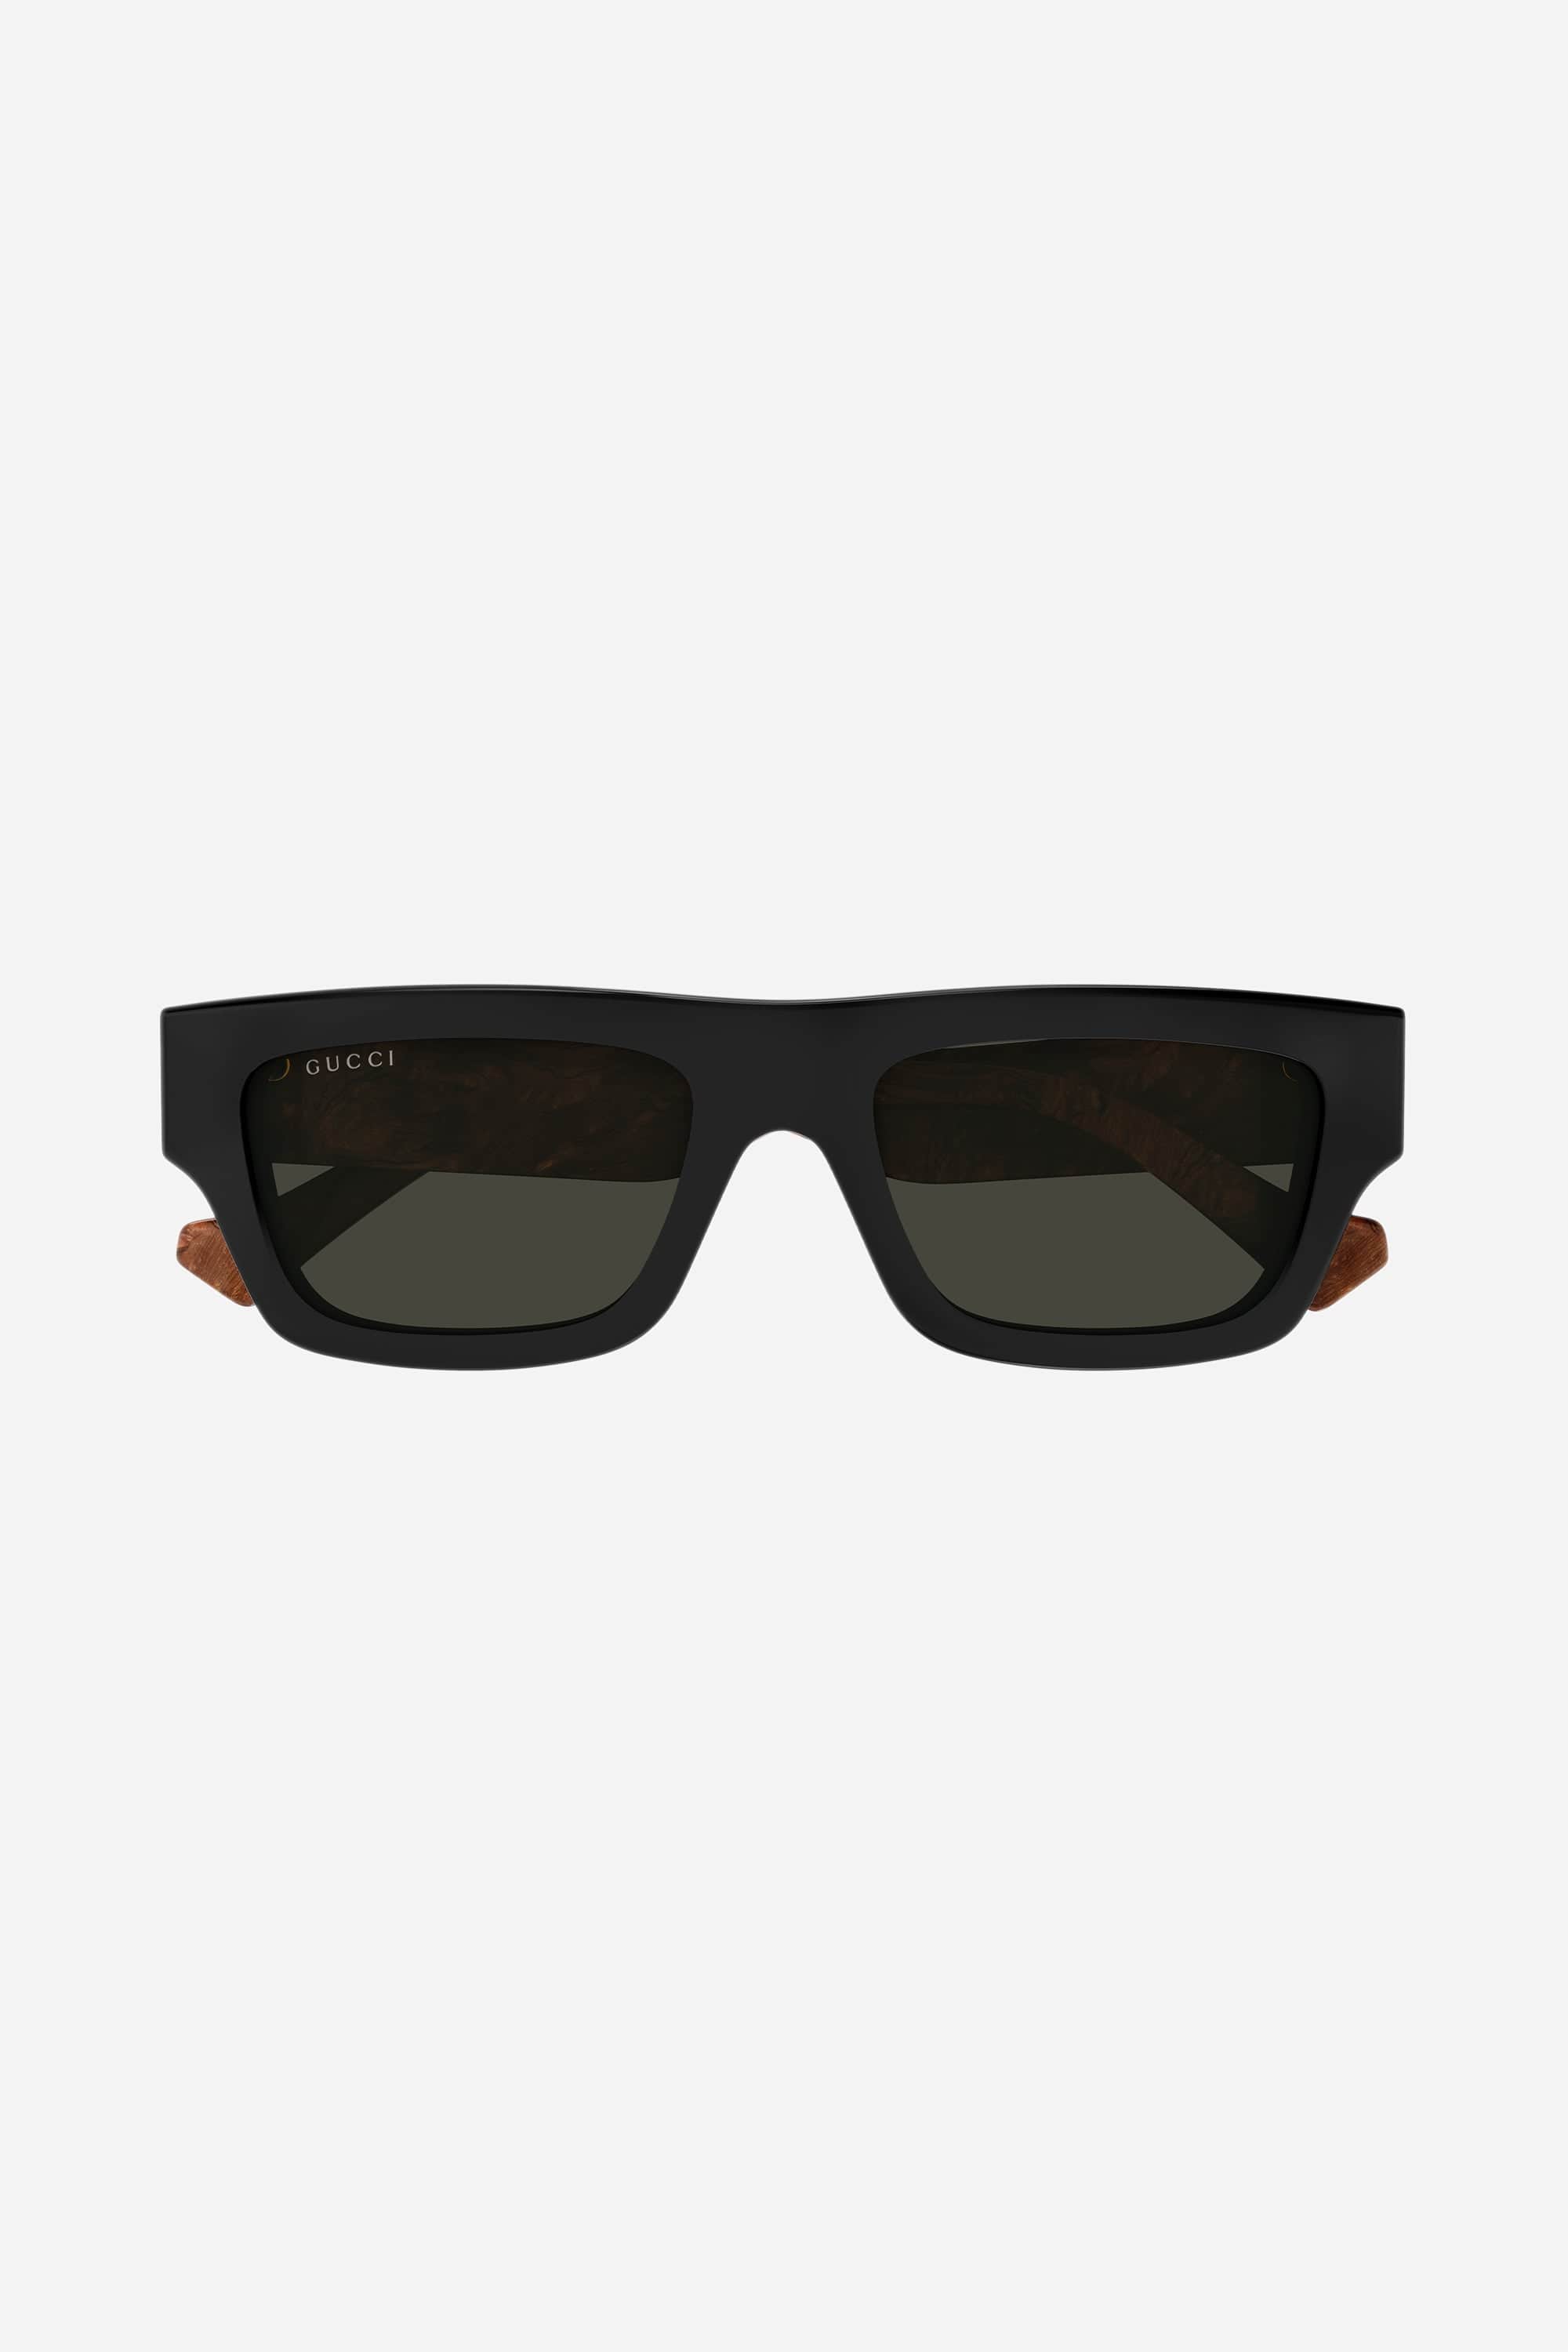 Gucci flat top black sunglasses with web temple - Eyewear Club